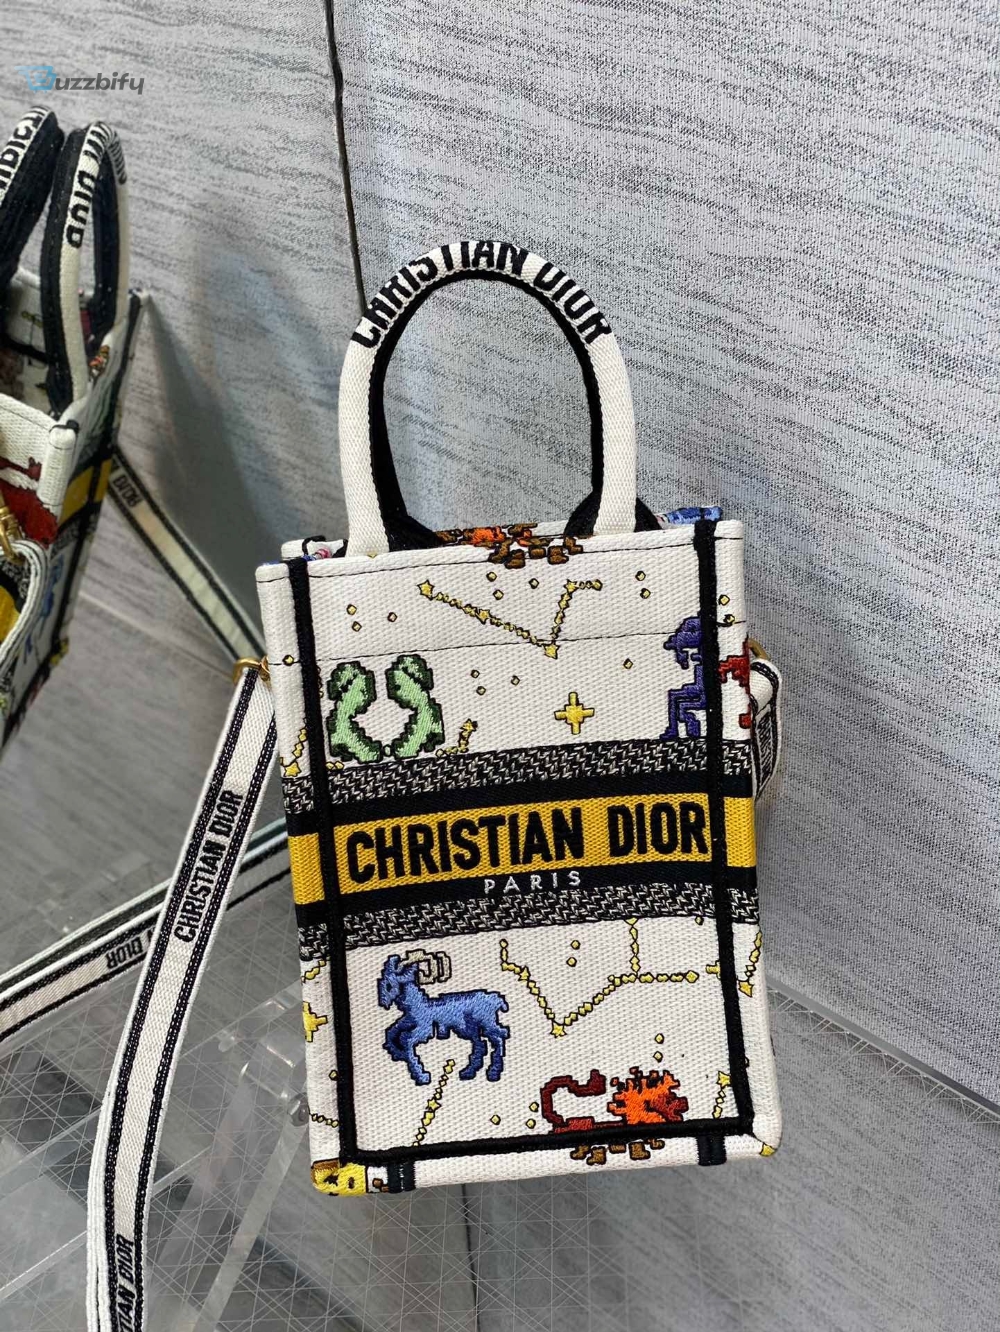 Christian Dior Mimi Dior Book ultralight Tote Phone Bag Yellow, For Women, Women�s Handbags 7in/18cm CD S5555CRTY_M930 